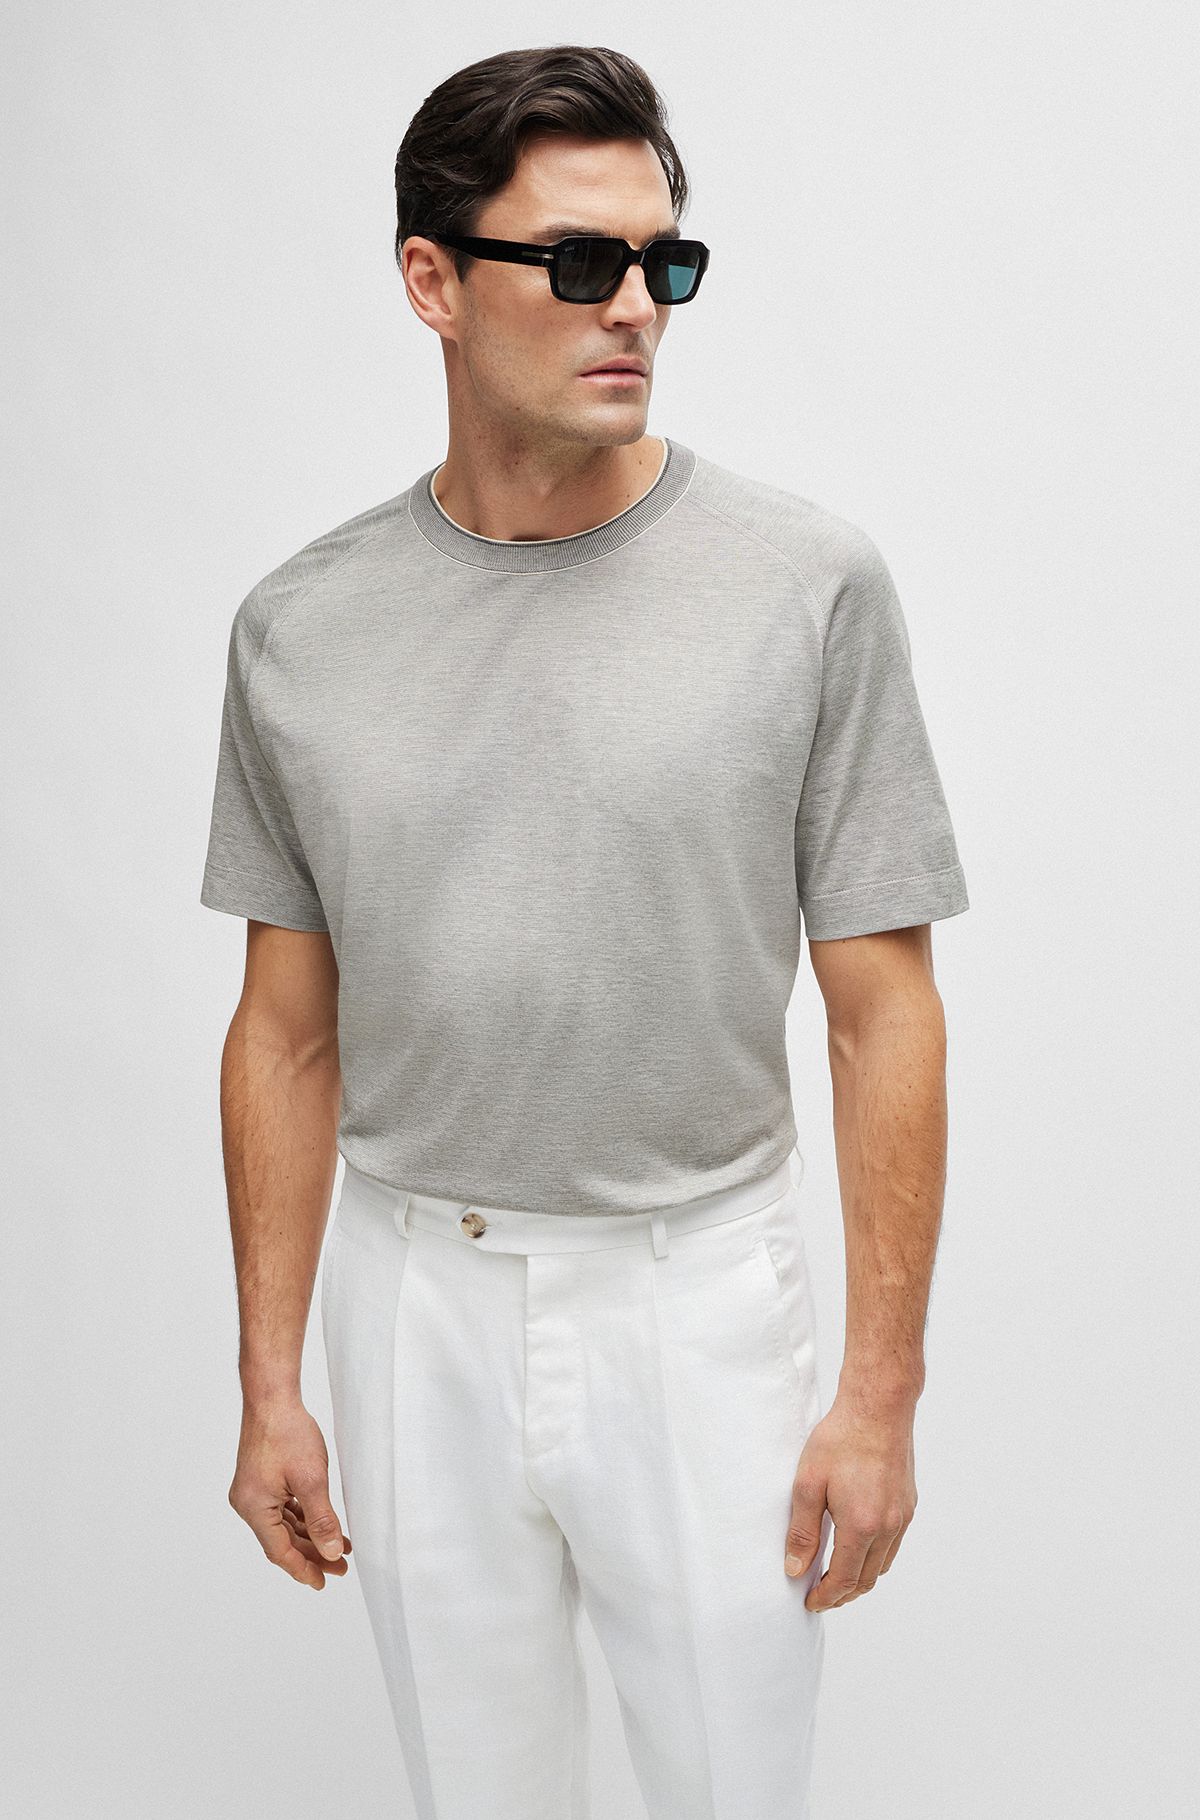 Stylish Grey T-Shirts for Men BOSS Men | HUGO by BOSS